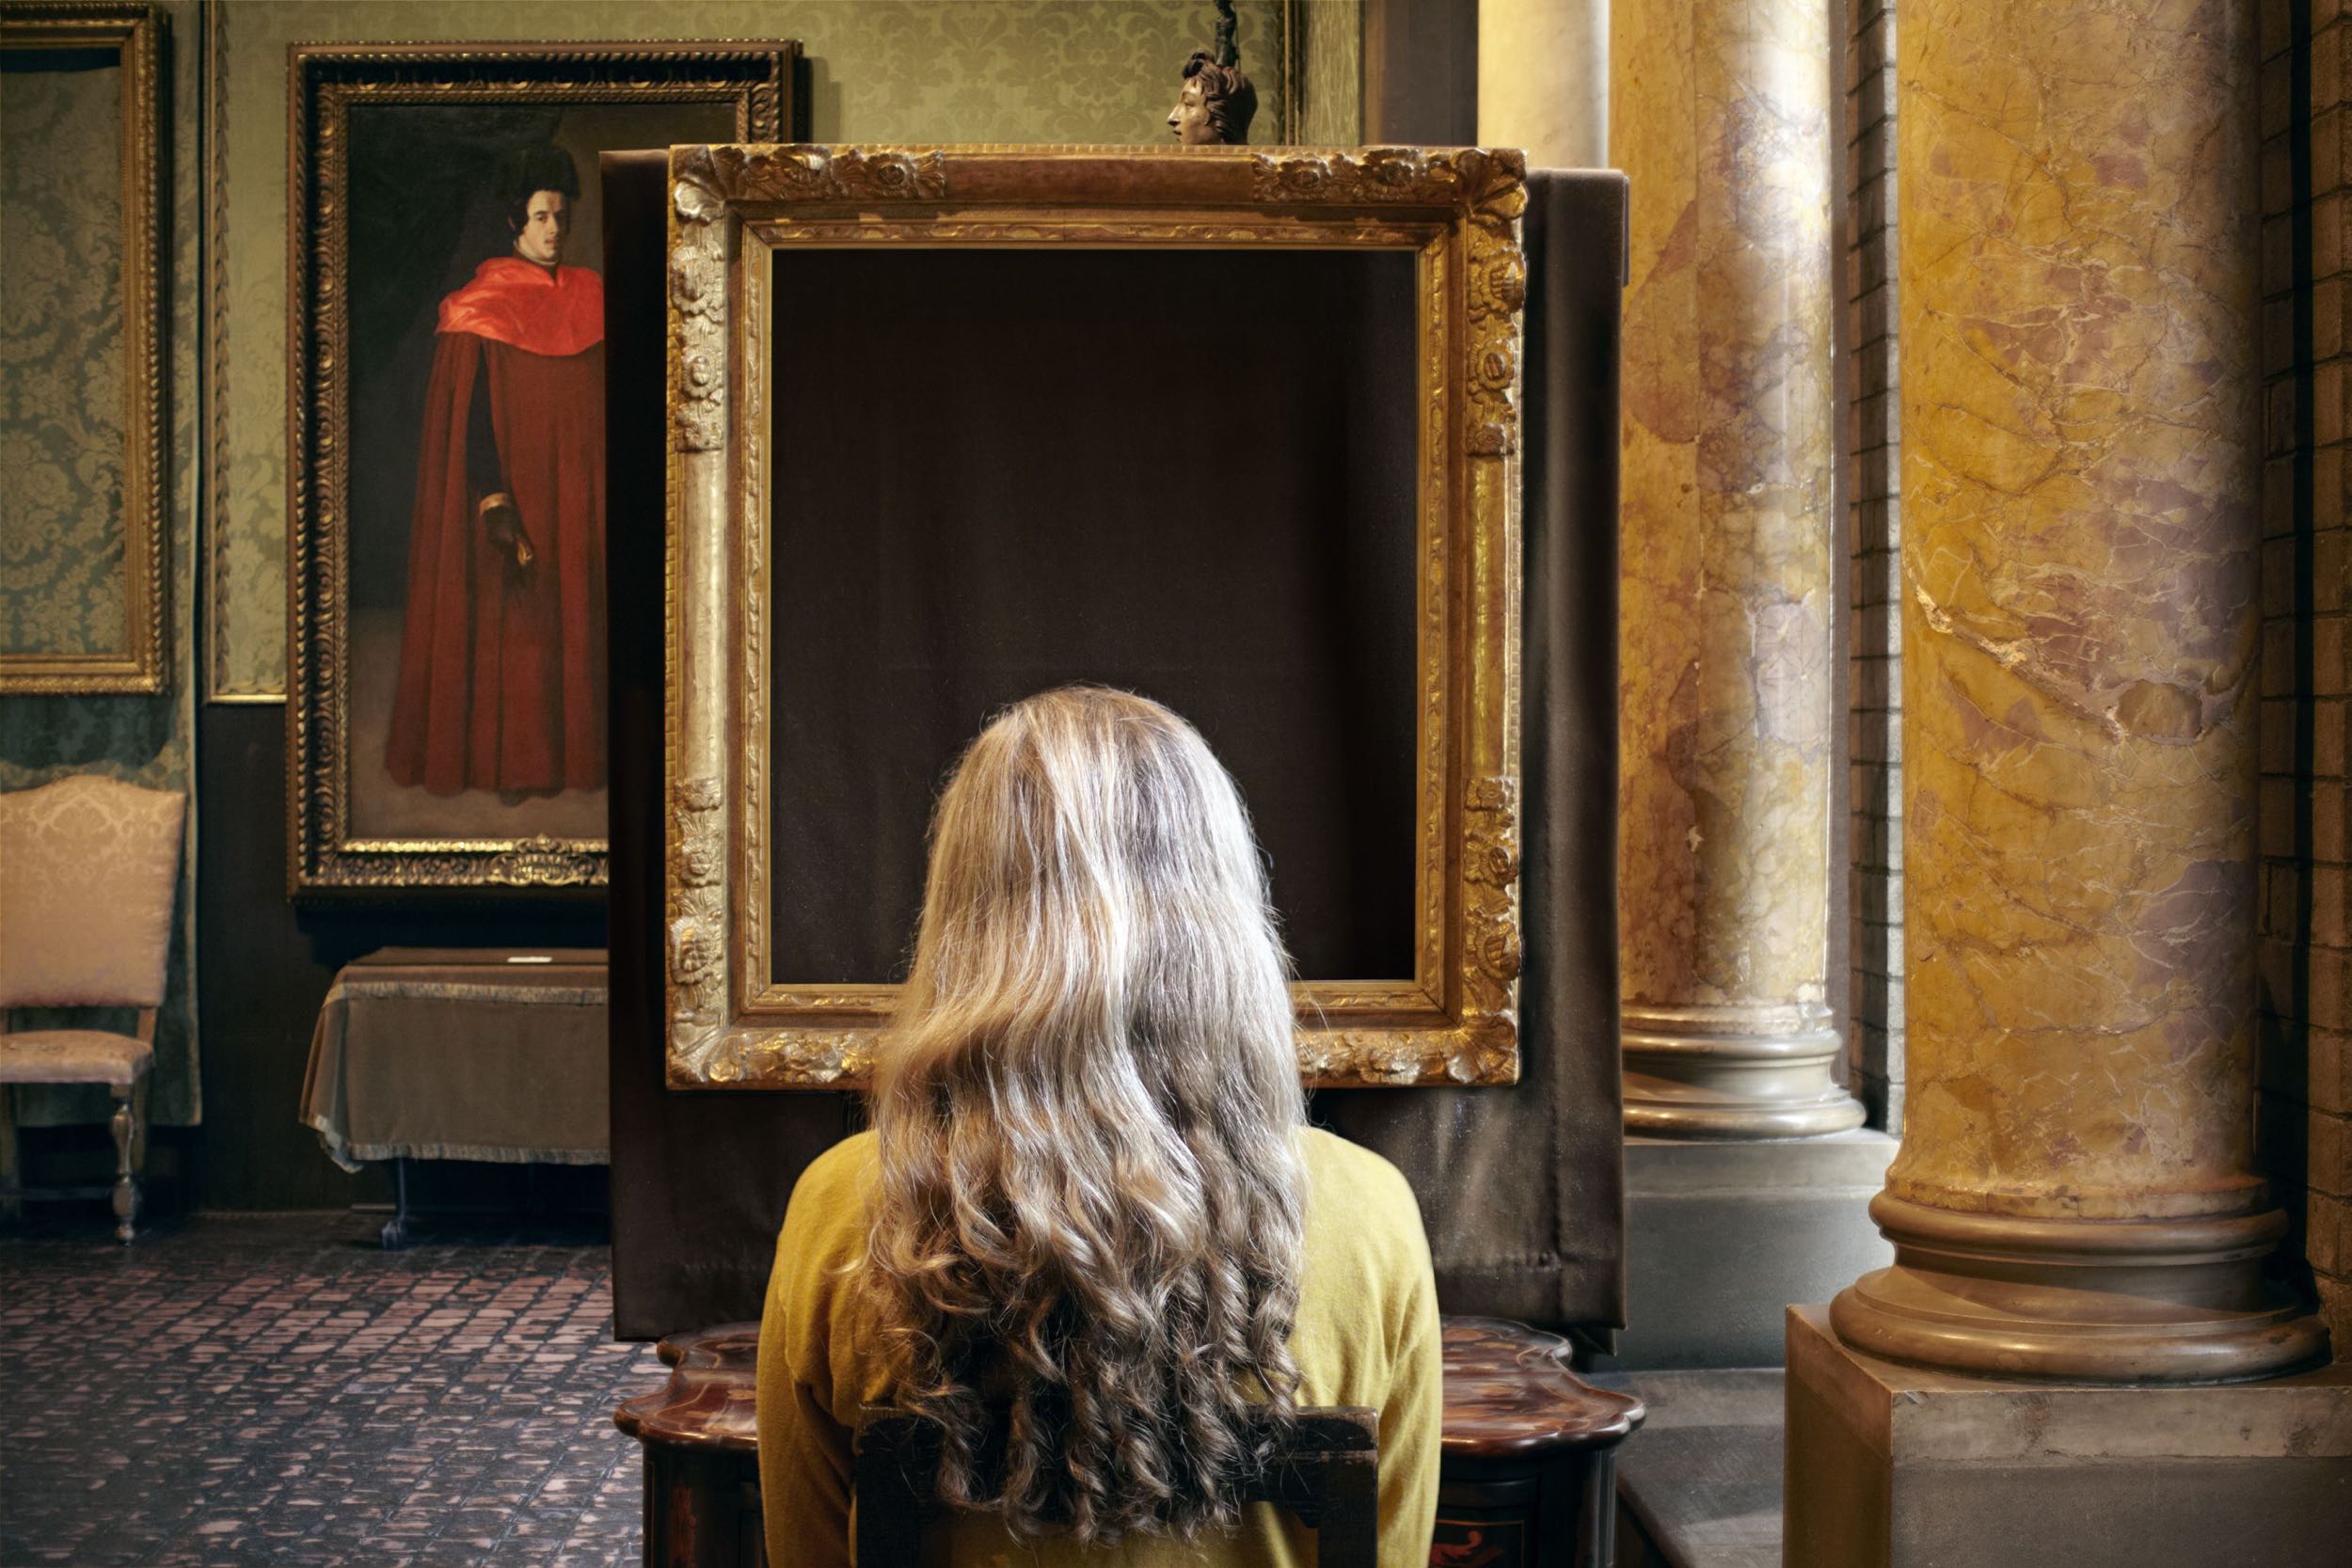 Sophie Calle. Que voyez-vous ? Le concert. Vermeer [¿Qué ven? El concierto. Vermeer], 2013 (detalle) © Sophie Calle/ADAGP, Paris, 2015. Courtesy Galerie Perrotin and Paula Cooper Gallery